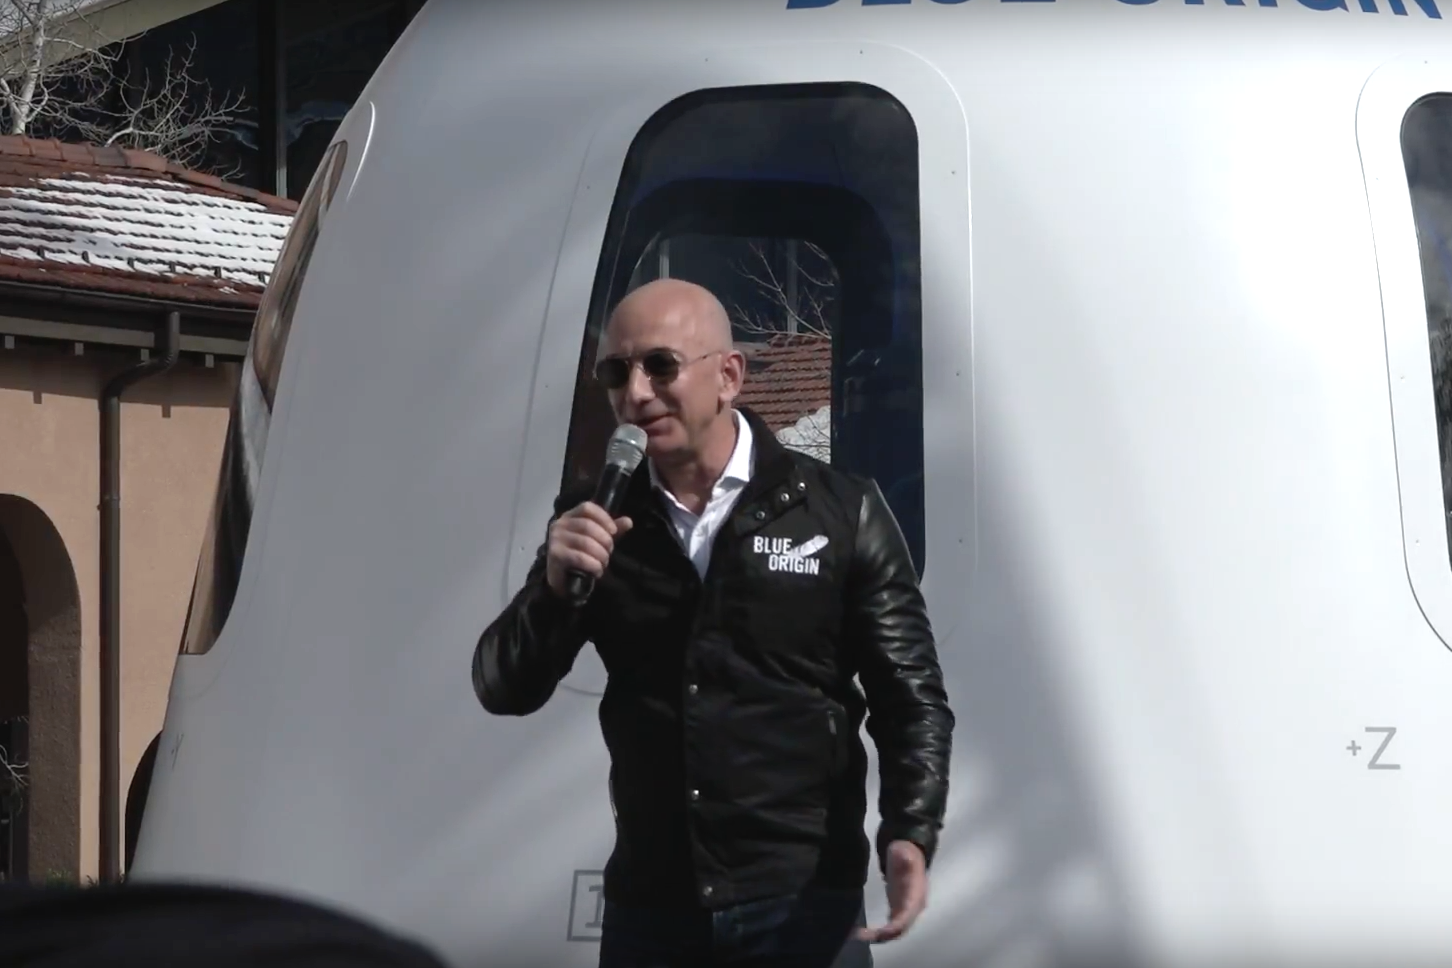 Does Jeff Bezos Look Like Pitbull to You, Too?